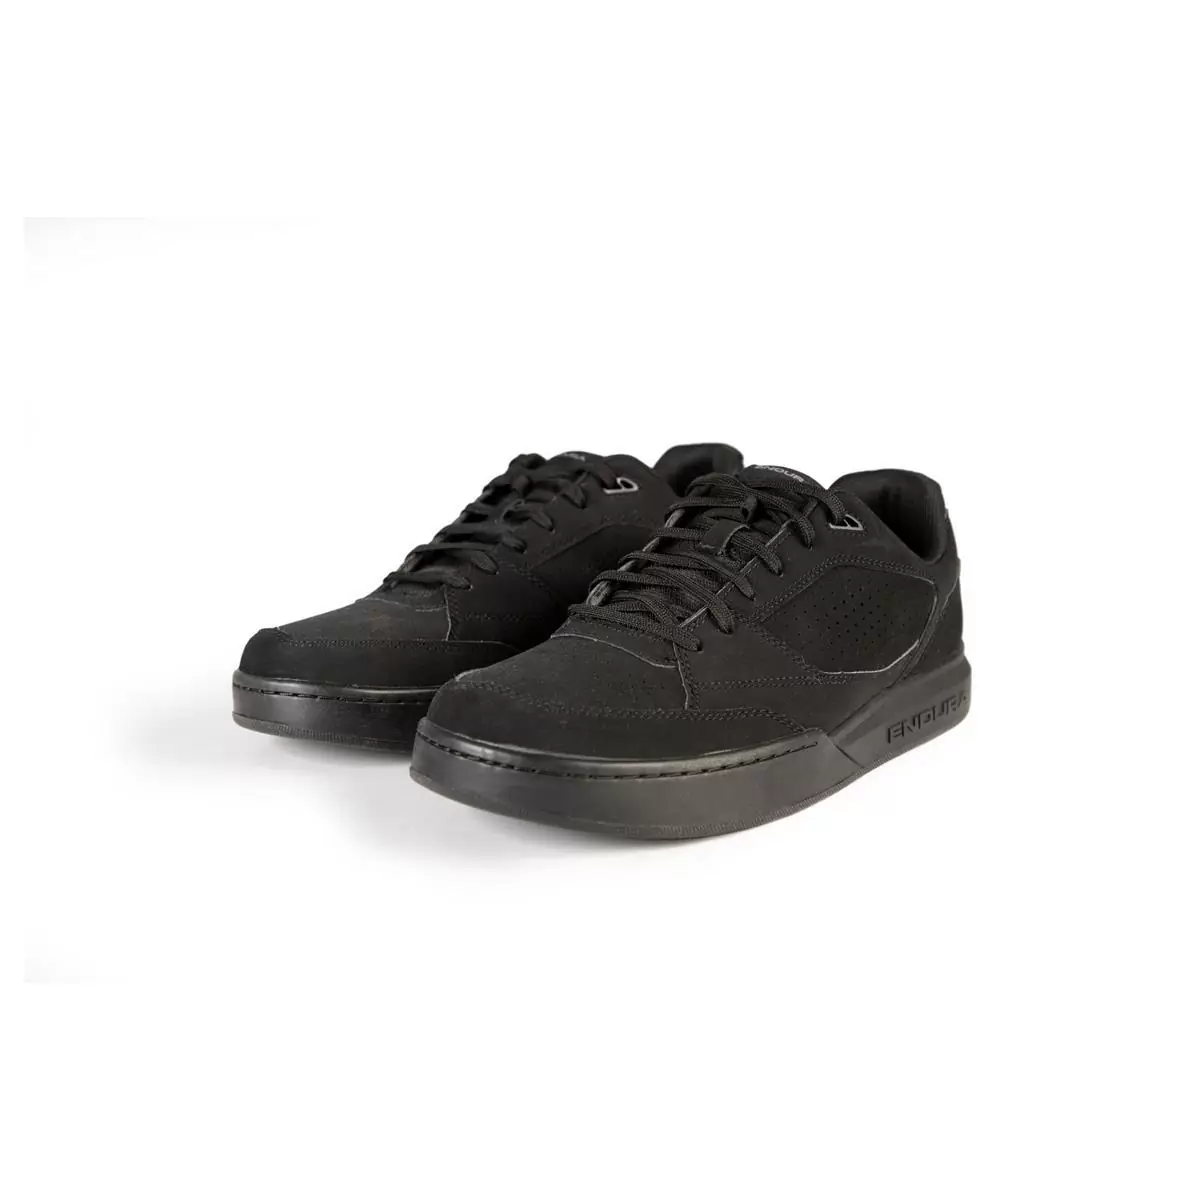 Hummvee Flat Pedal Shoes Black Size 43 - image